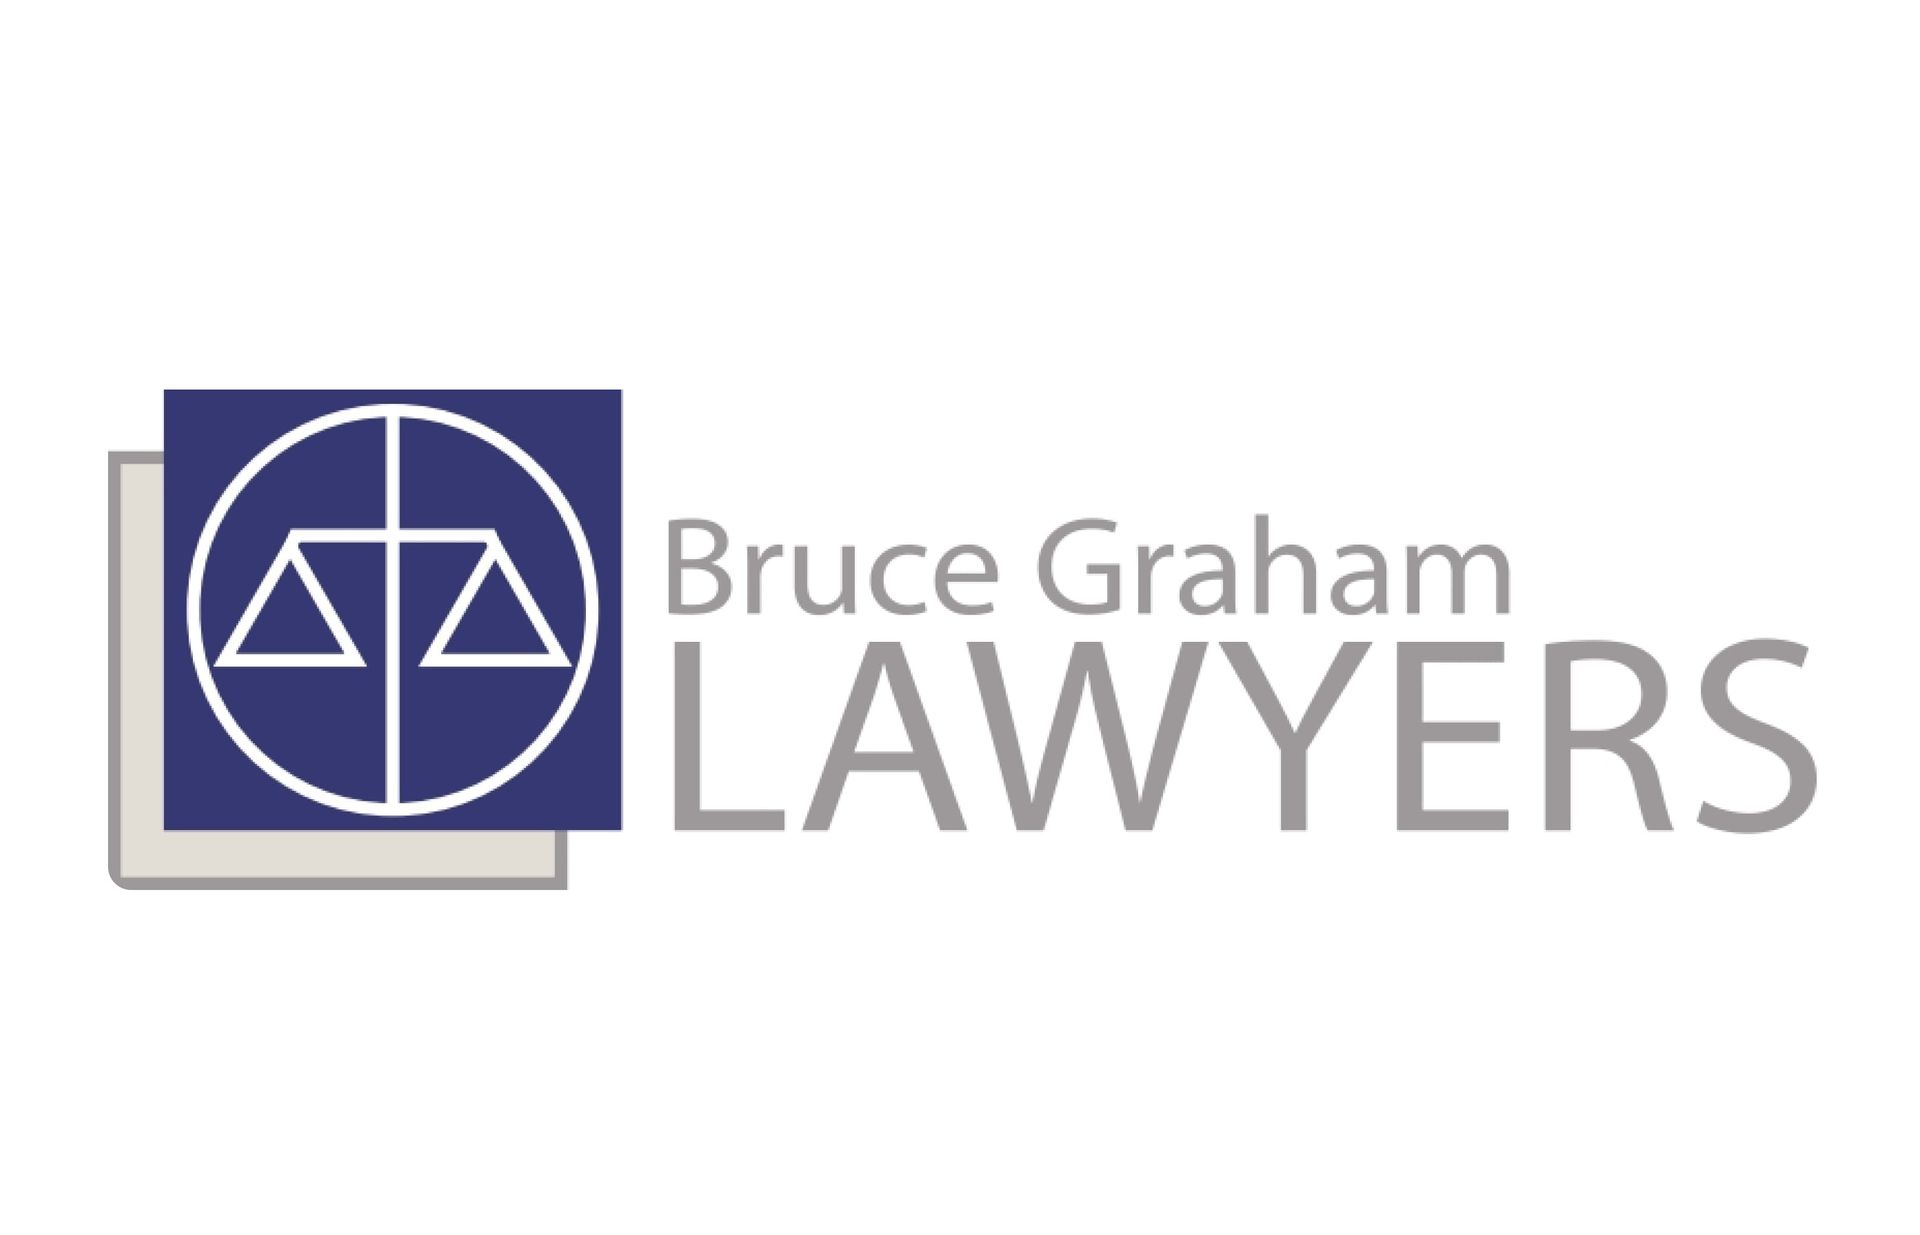 Bruce Graham Lawyers
